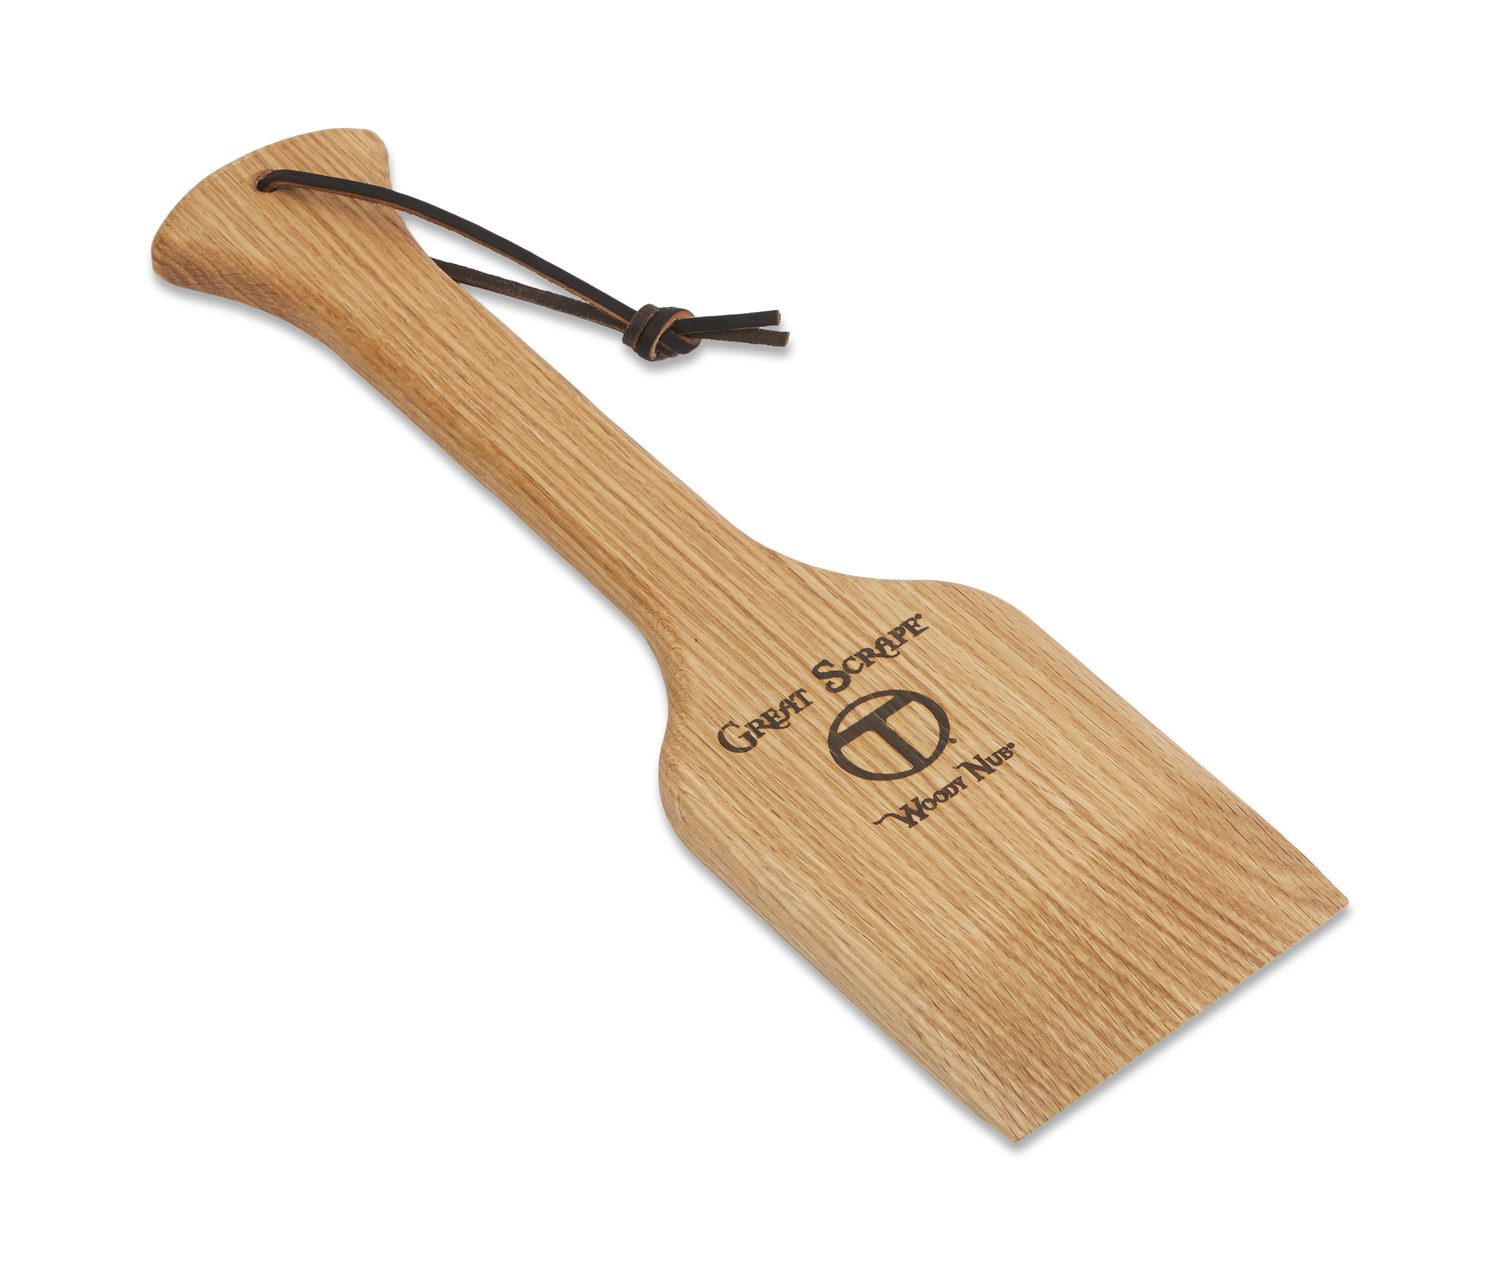 Wood Grill Scraper  The Great Scrape Woody Paddle